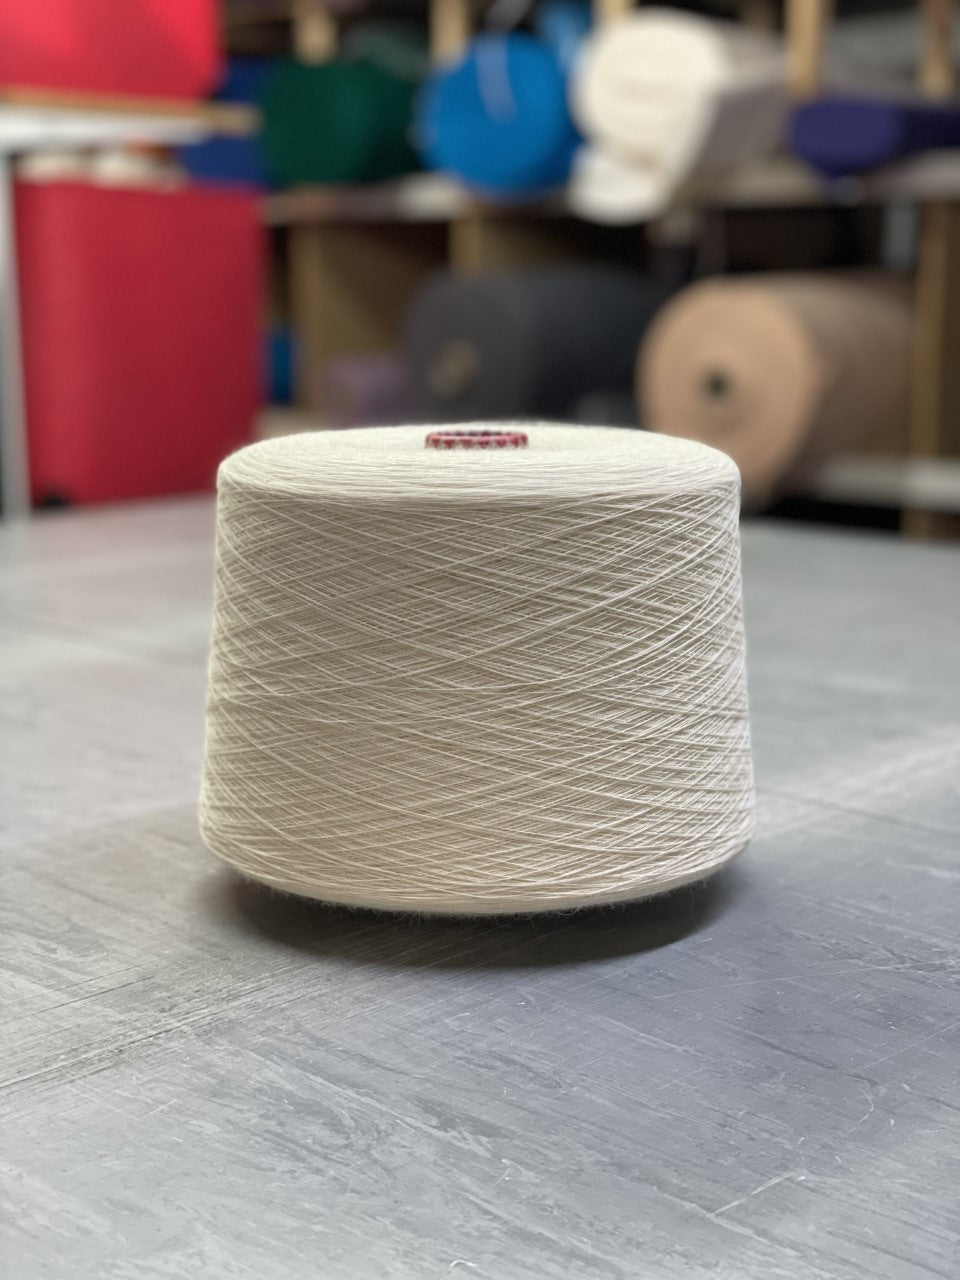 10kg Wool Blend Reverse Twist Weaving Yarn Cones